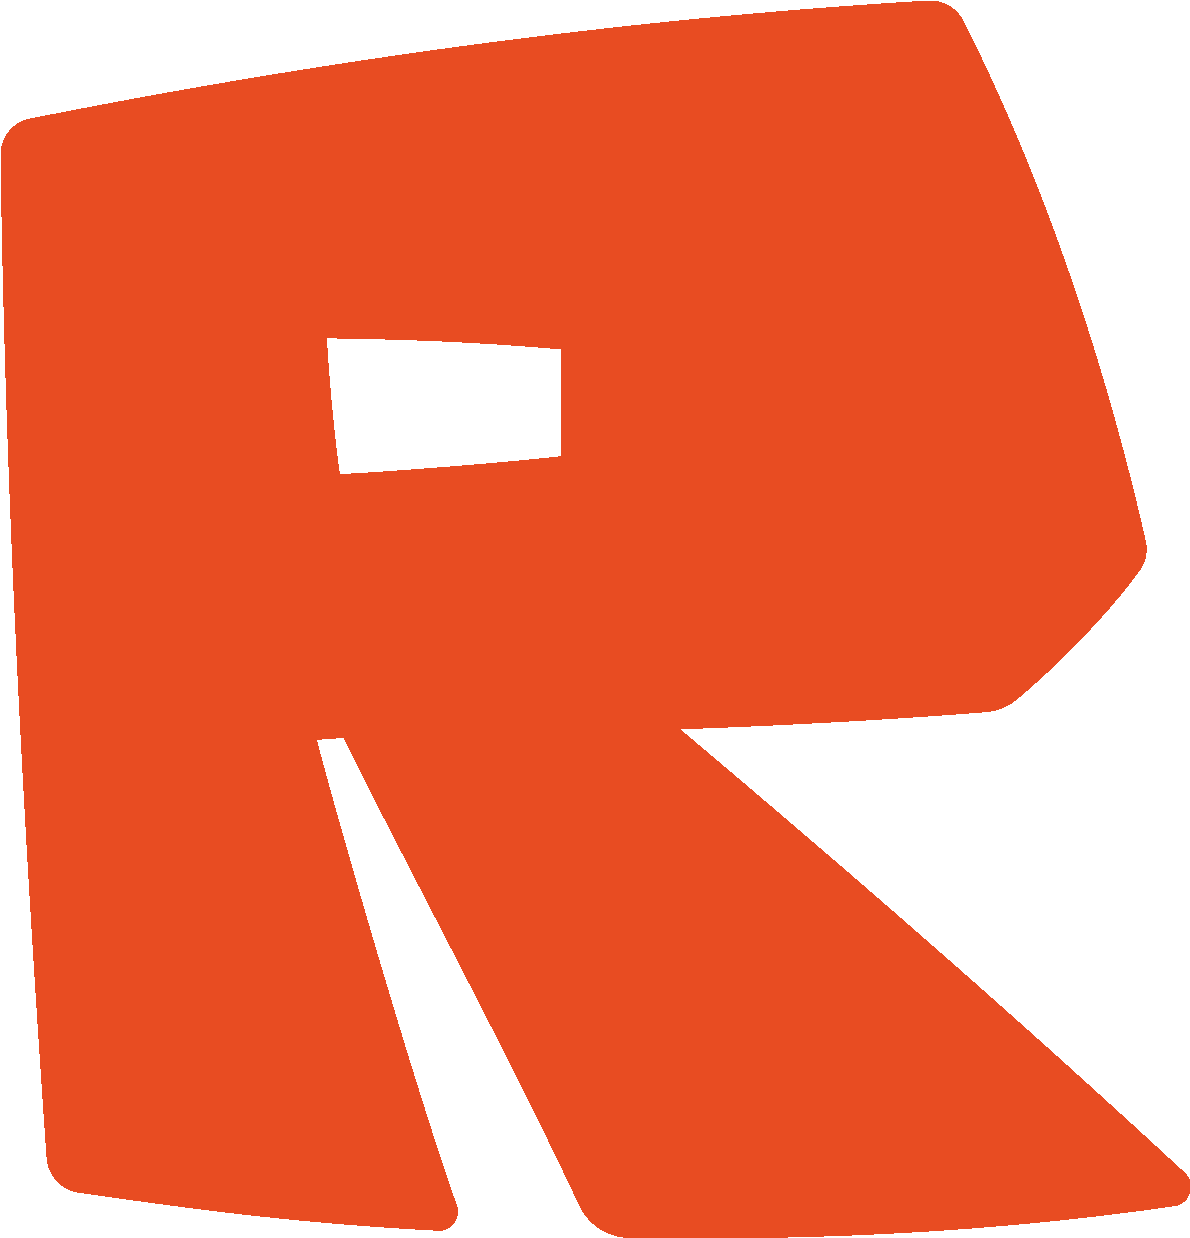 Download Roblox Wikia Favicon Roblox Wikia Png Image With No Background Pngkey Com - roblox logo roblox wikia